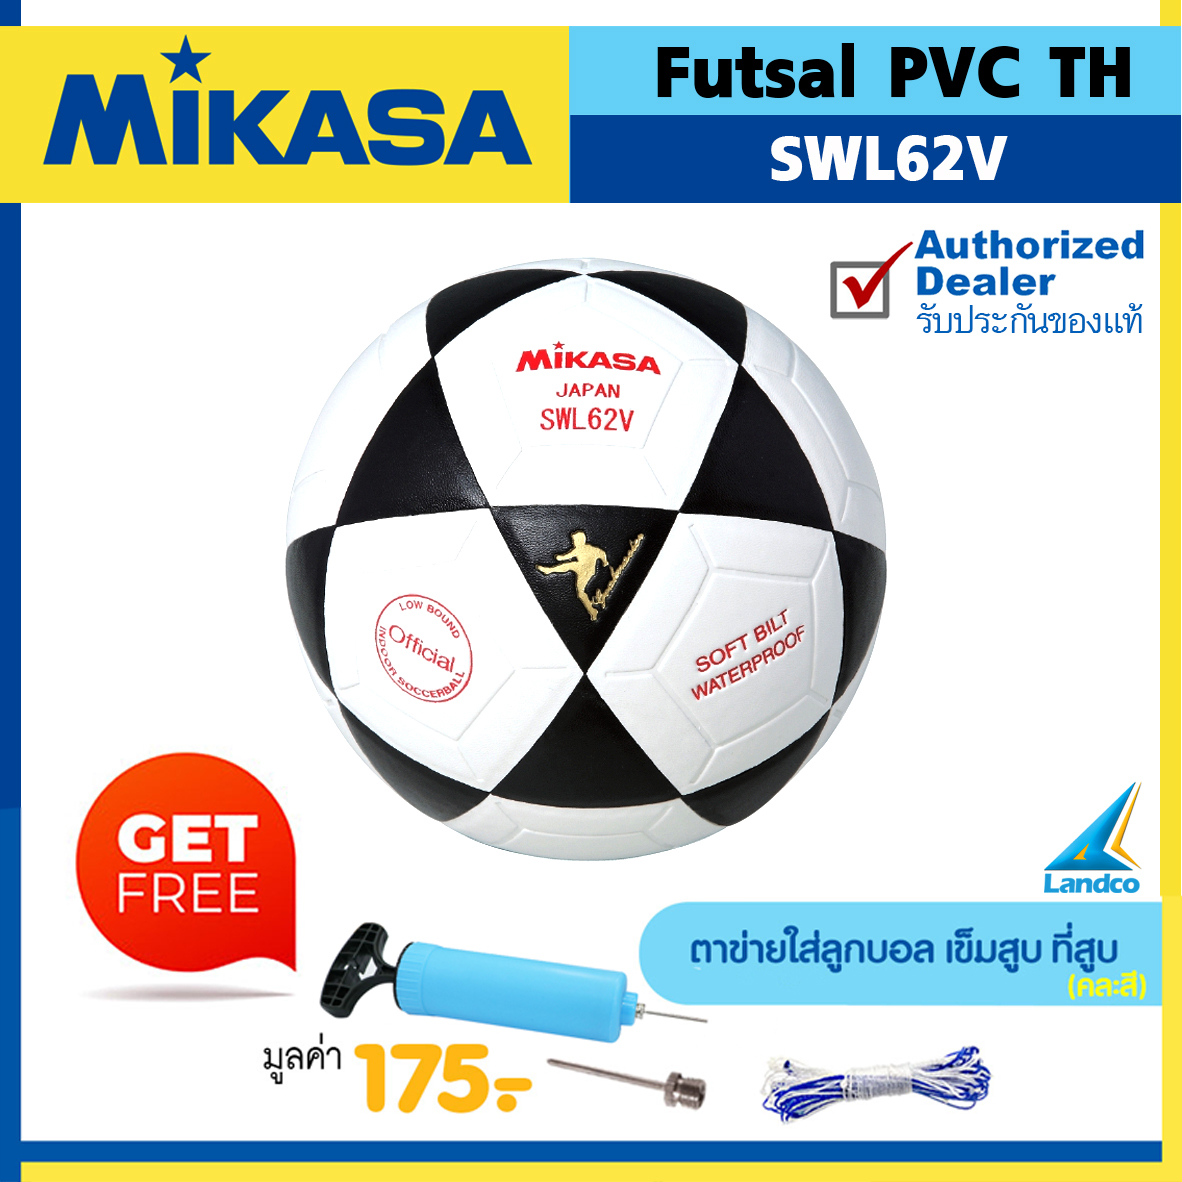 MIKASA ลูกฟุตซอลหนังอัด Futsal PVC th SWL62V(565) (แถมฟรี ตาข่ายใส่ลูกบอล + เข็มสูบ + สูบลมมือ SPL)